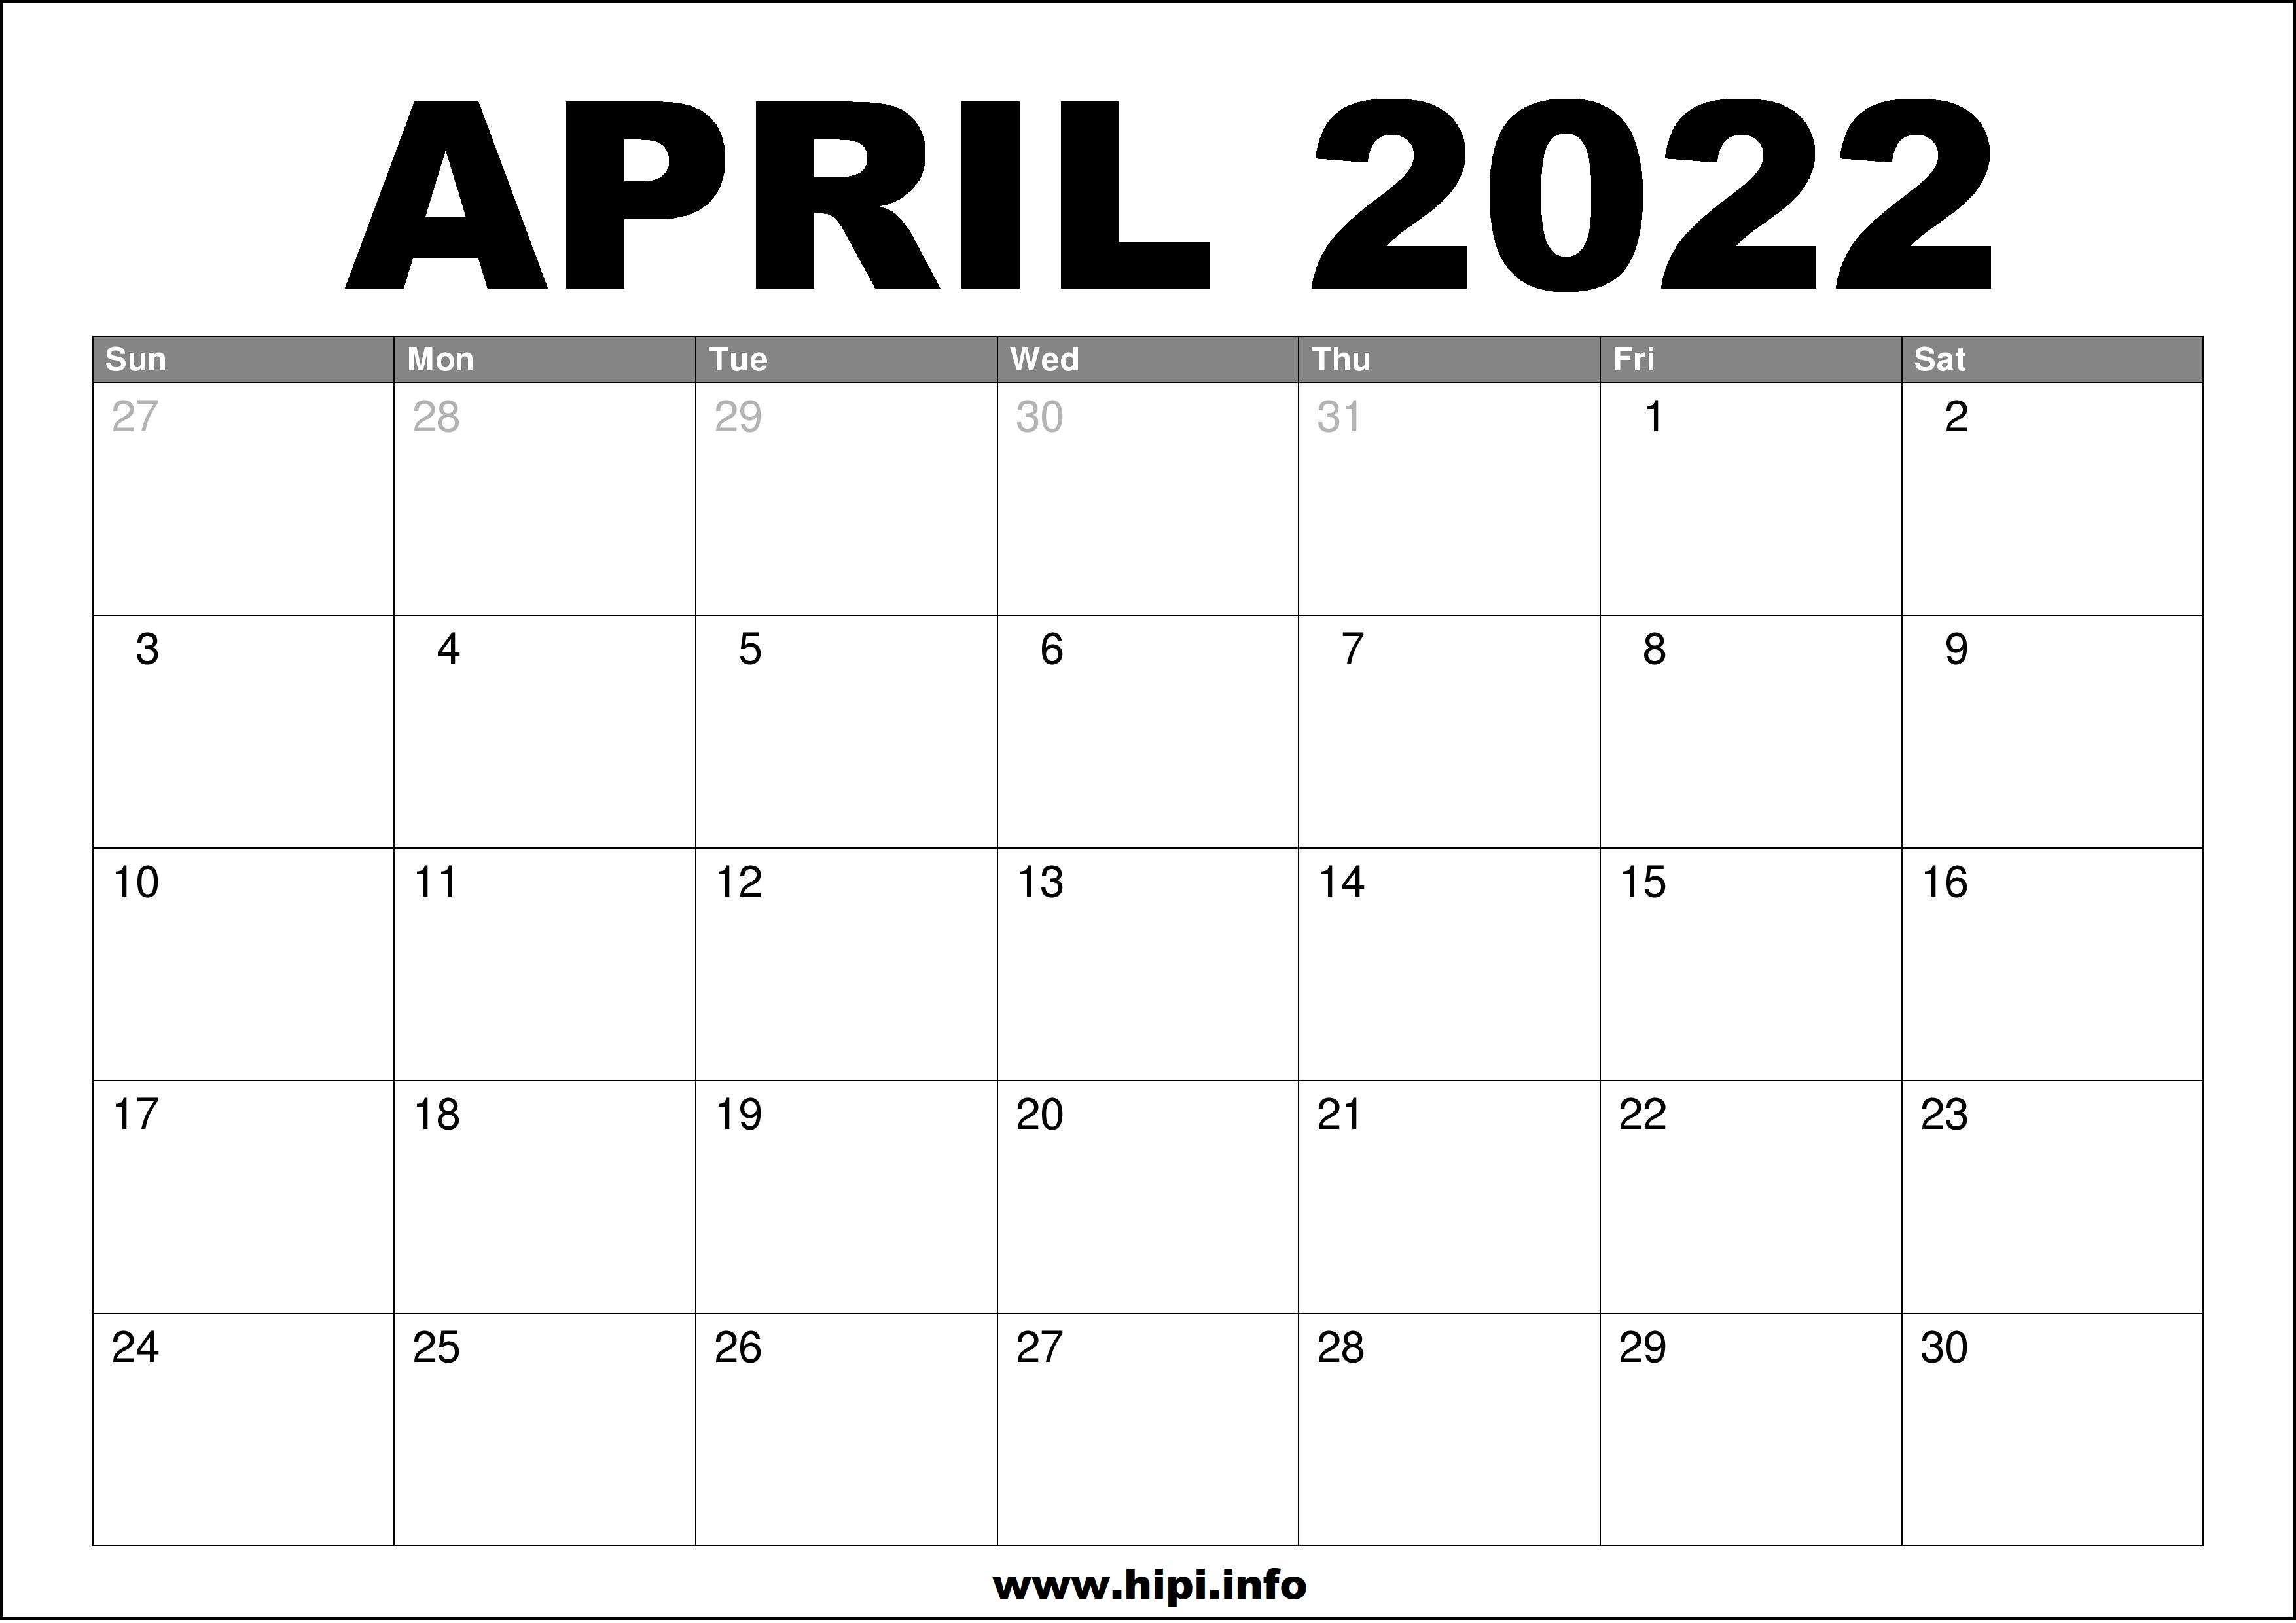 Free Printable Calendar 2022 April April 2022 Calendar Printable Free - Hipi.info | Calendars Printable Free